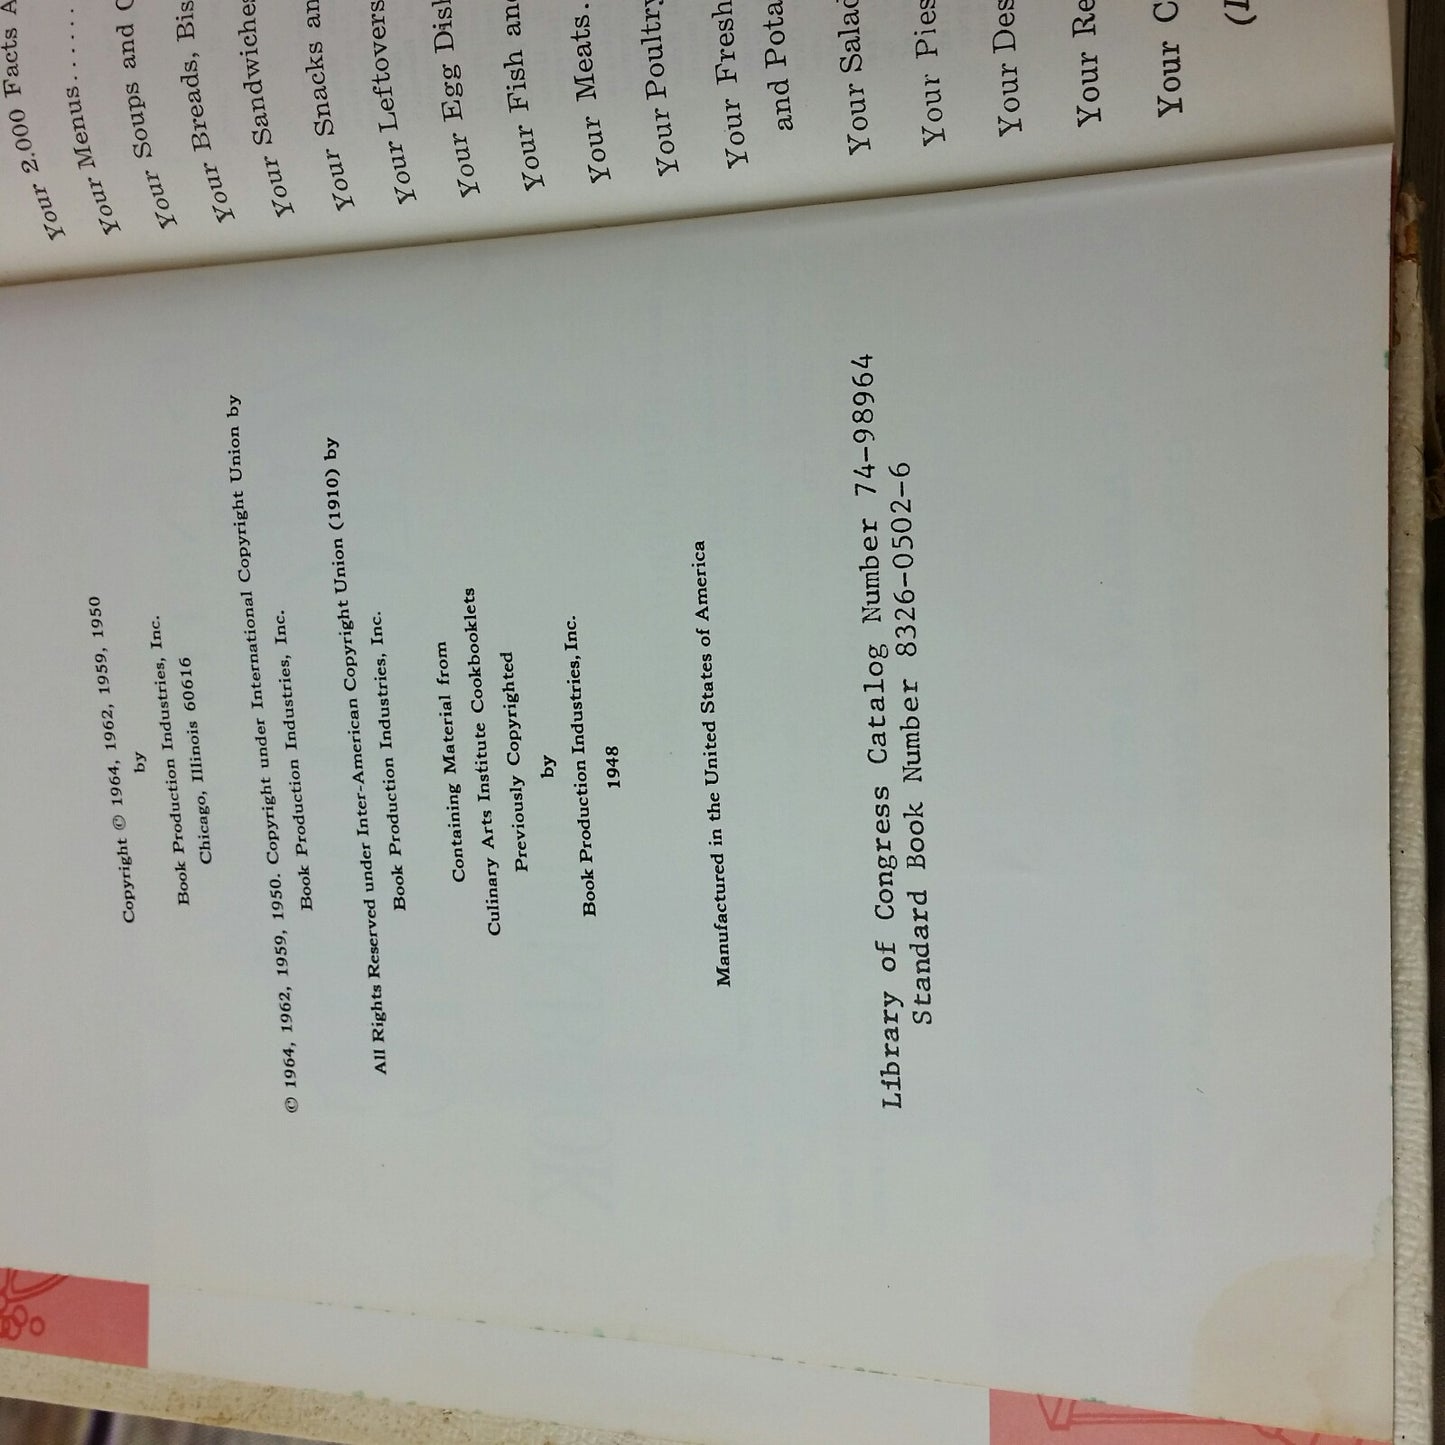 Vtg Cookbook Culinary Arts Institute Encyclopedic Recipes 1970 Ruth Berolzheimer - At Grandma's Table